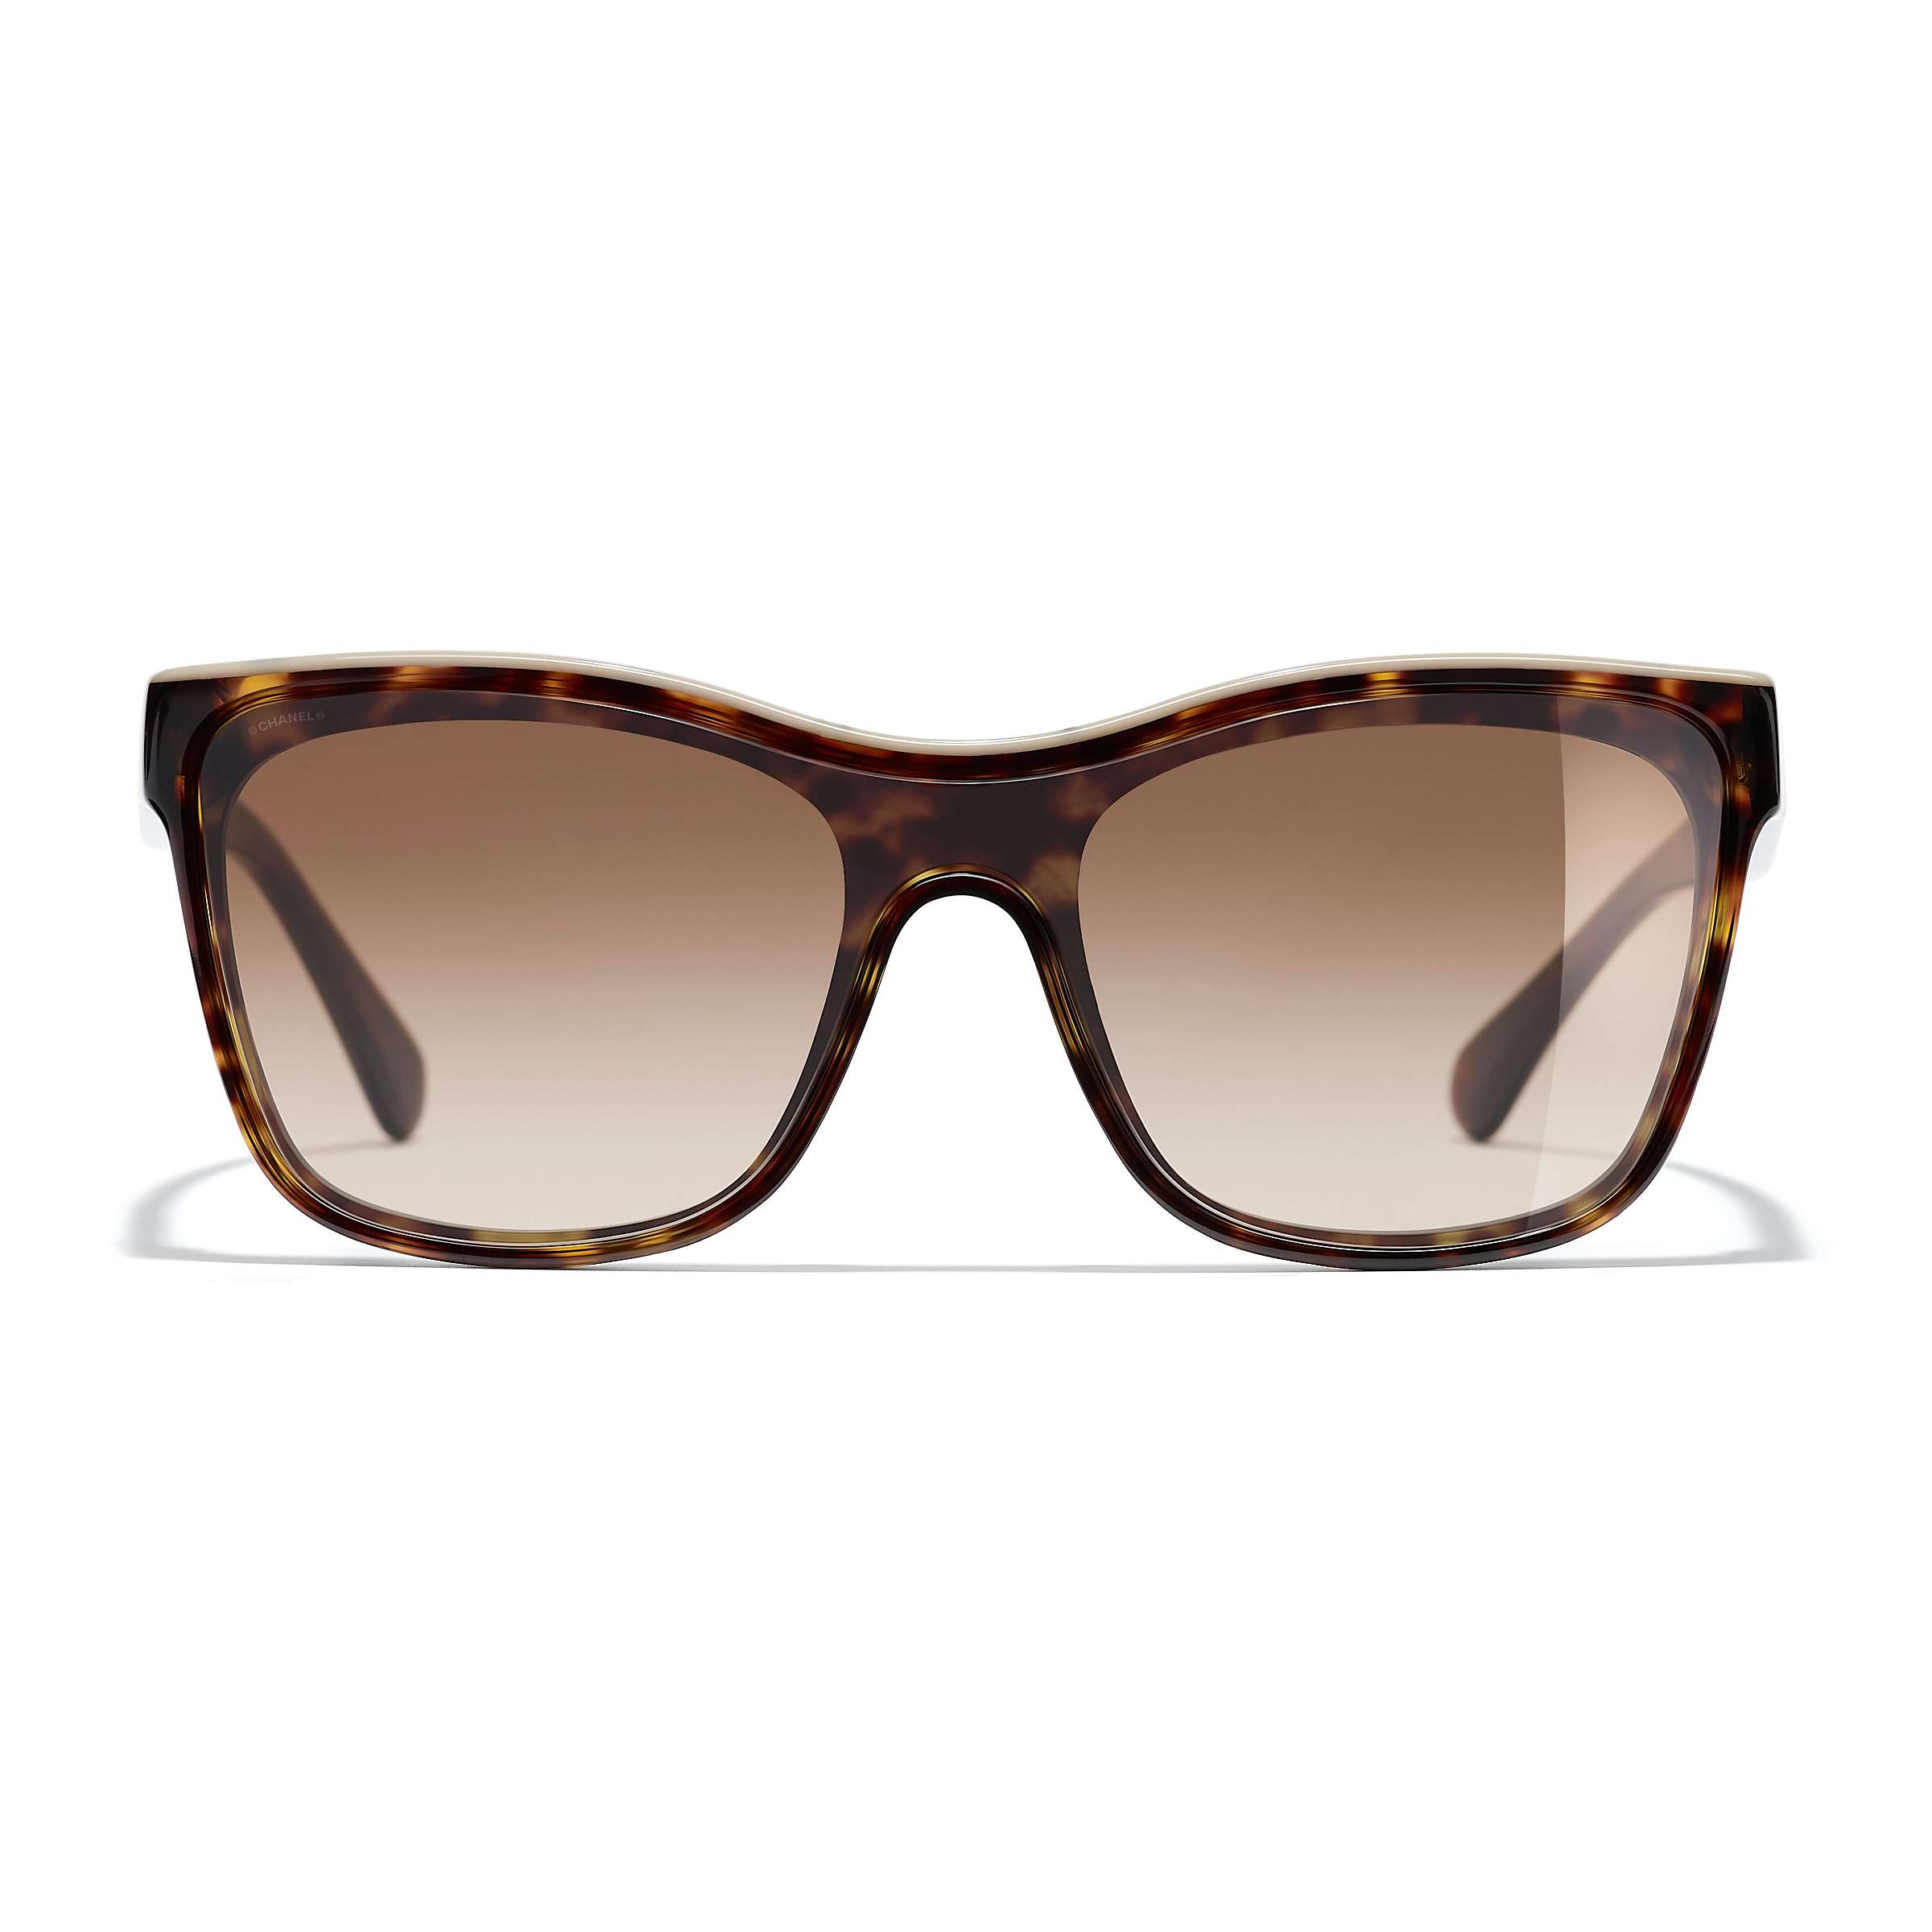 Buy CHANEL Pillow Sunglasses CH5418 Dark Havana/Beige Online at johnlewis.com